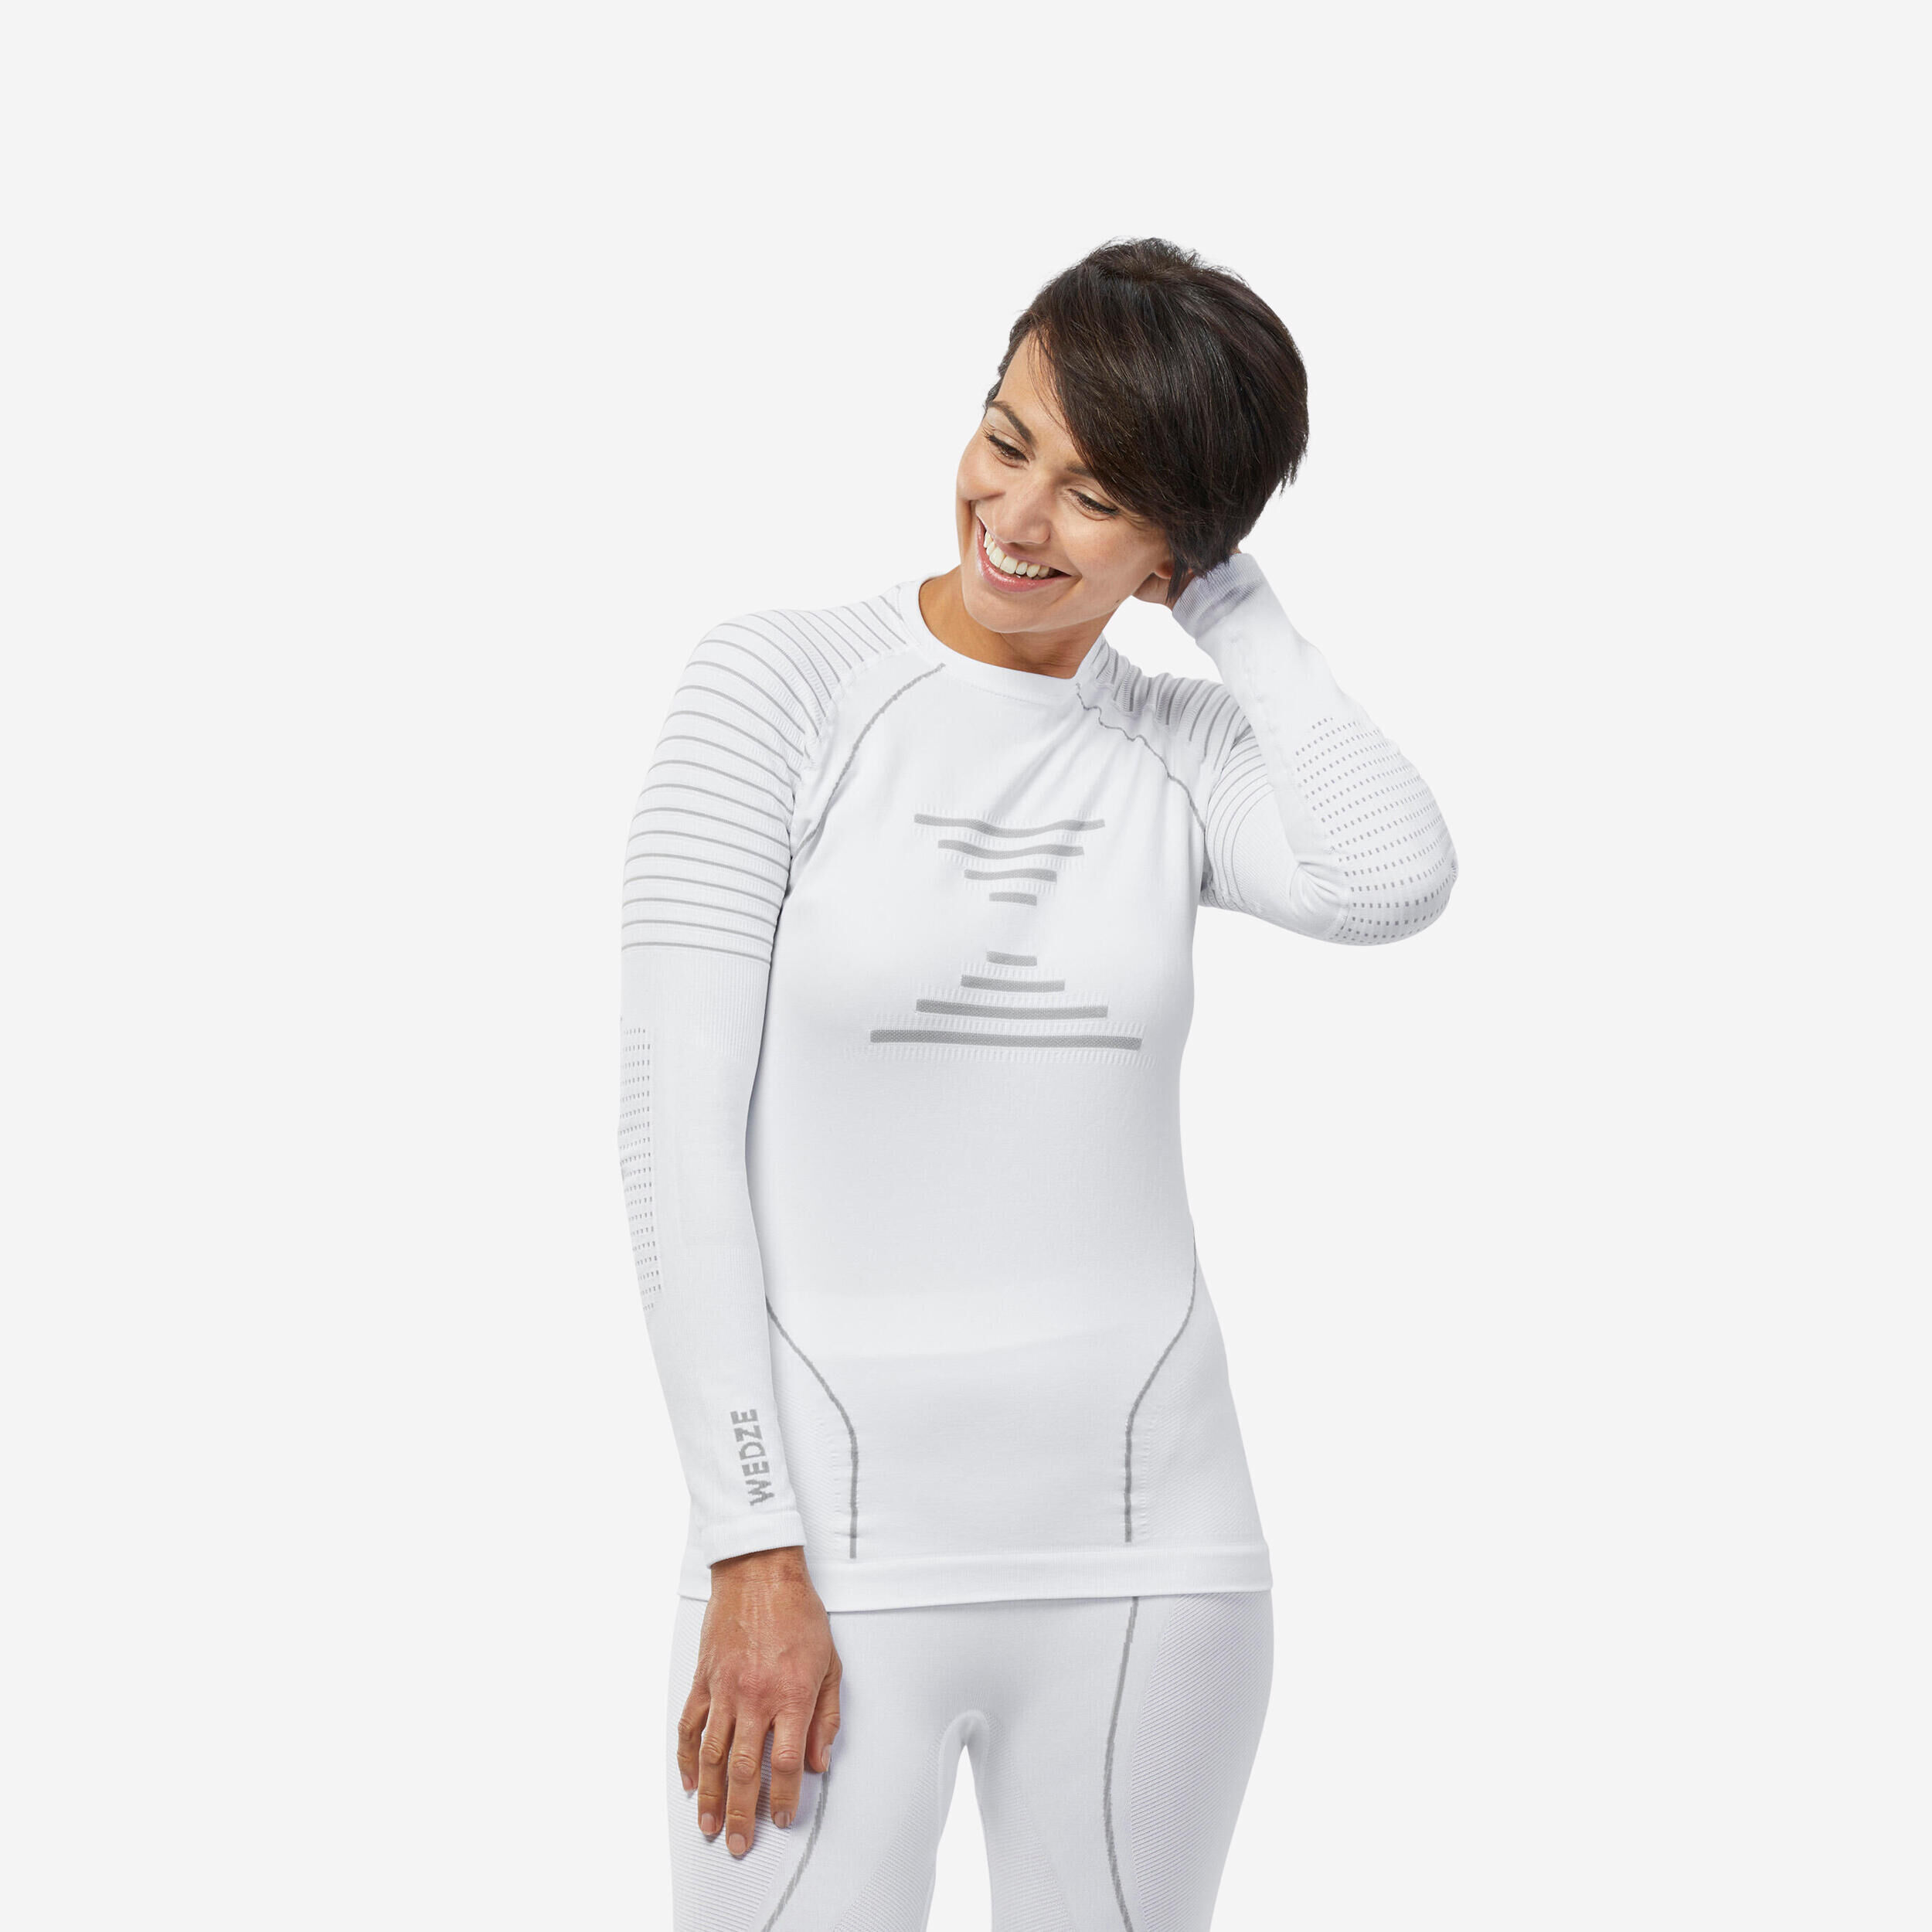 WEDZE Women’s ski thermal base layer top 900 - white 